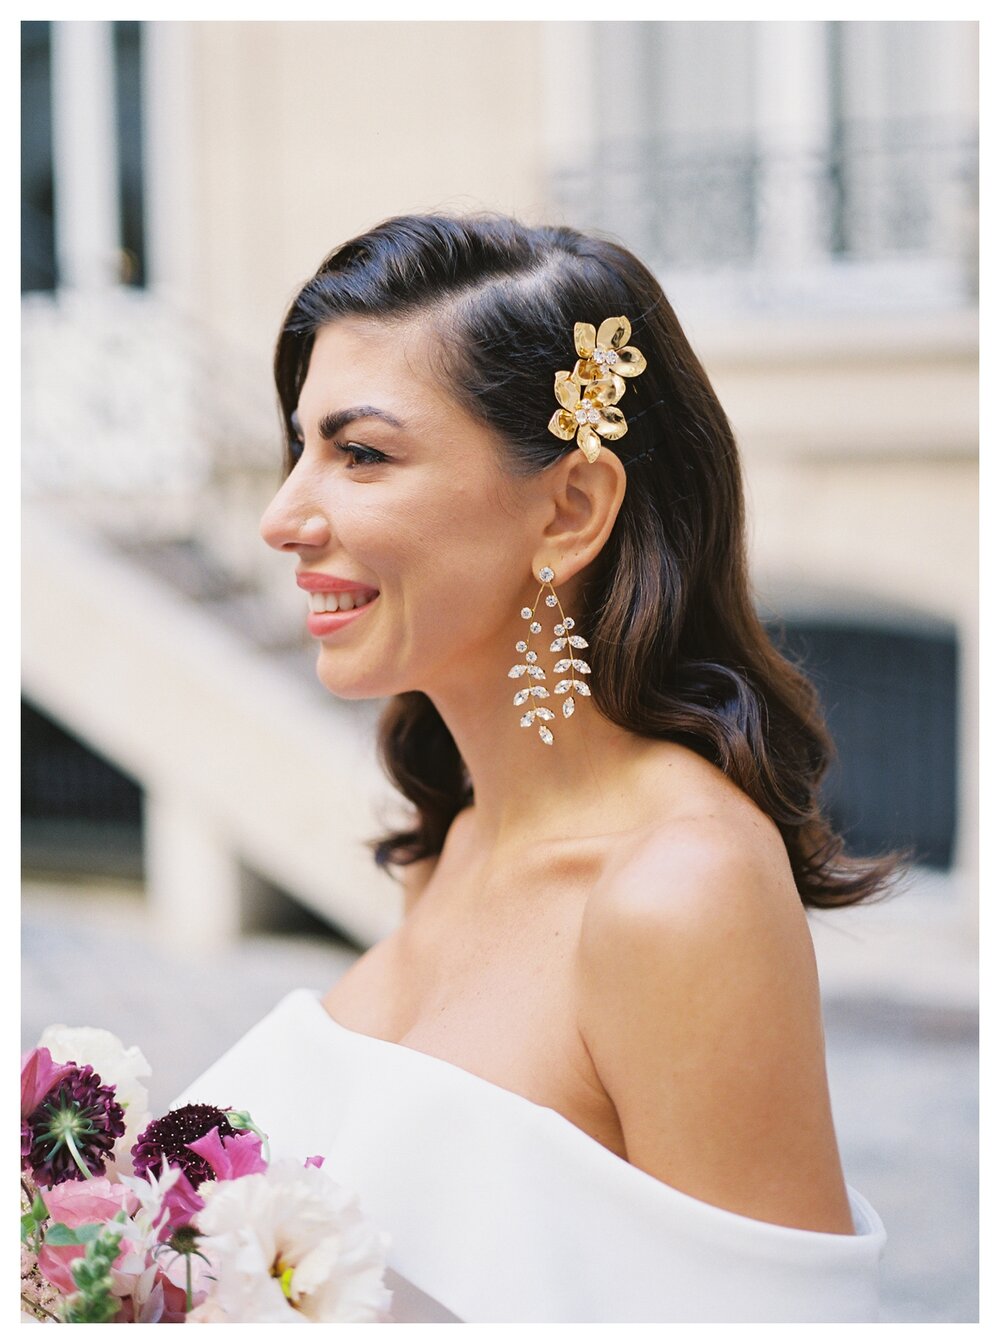  bride accessories, wedding hair, bride earrings, bridal comb, bride portrait, bardot wedding dress  